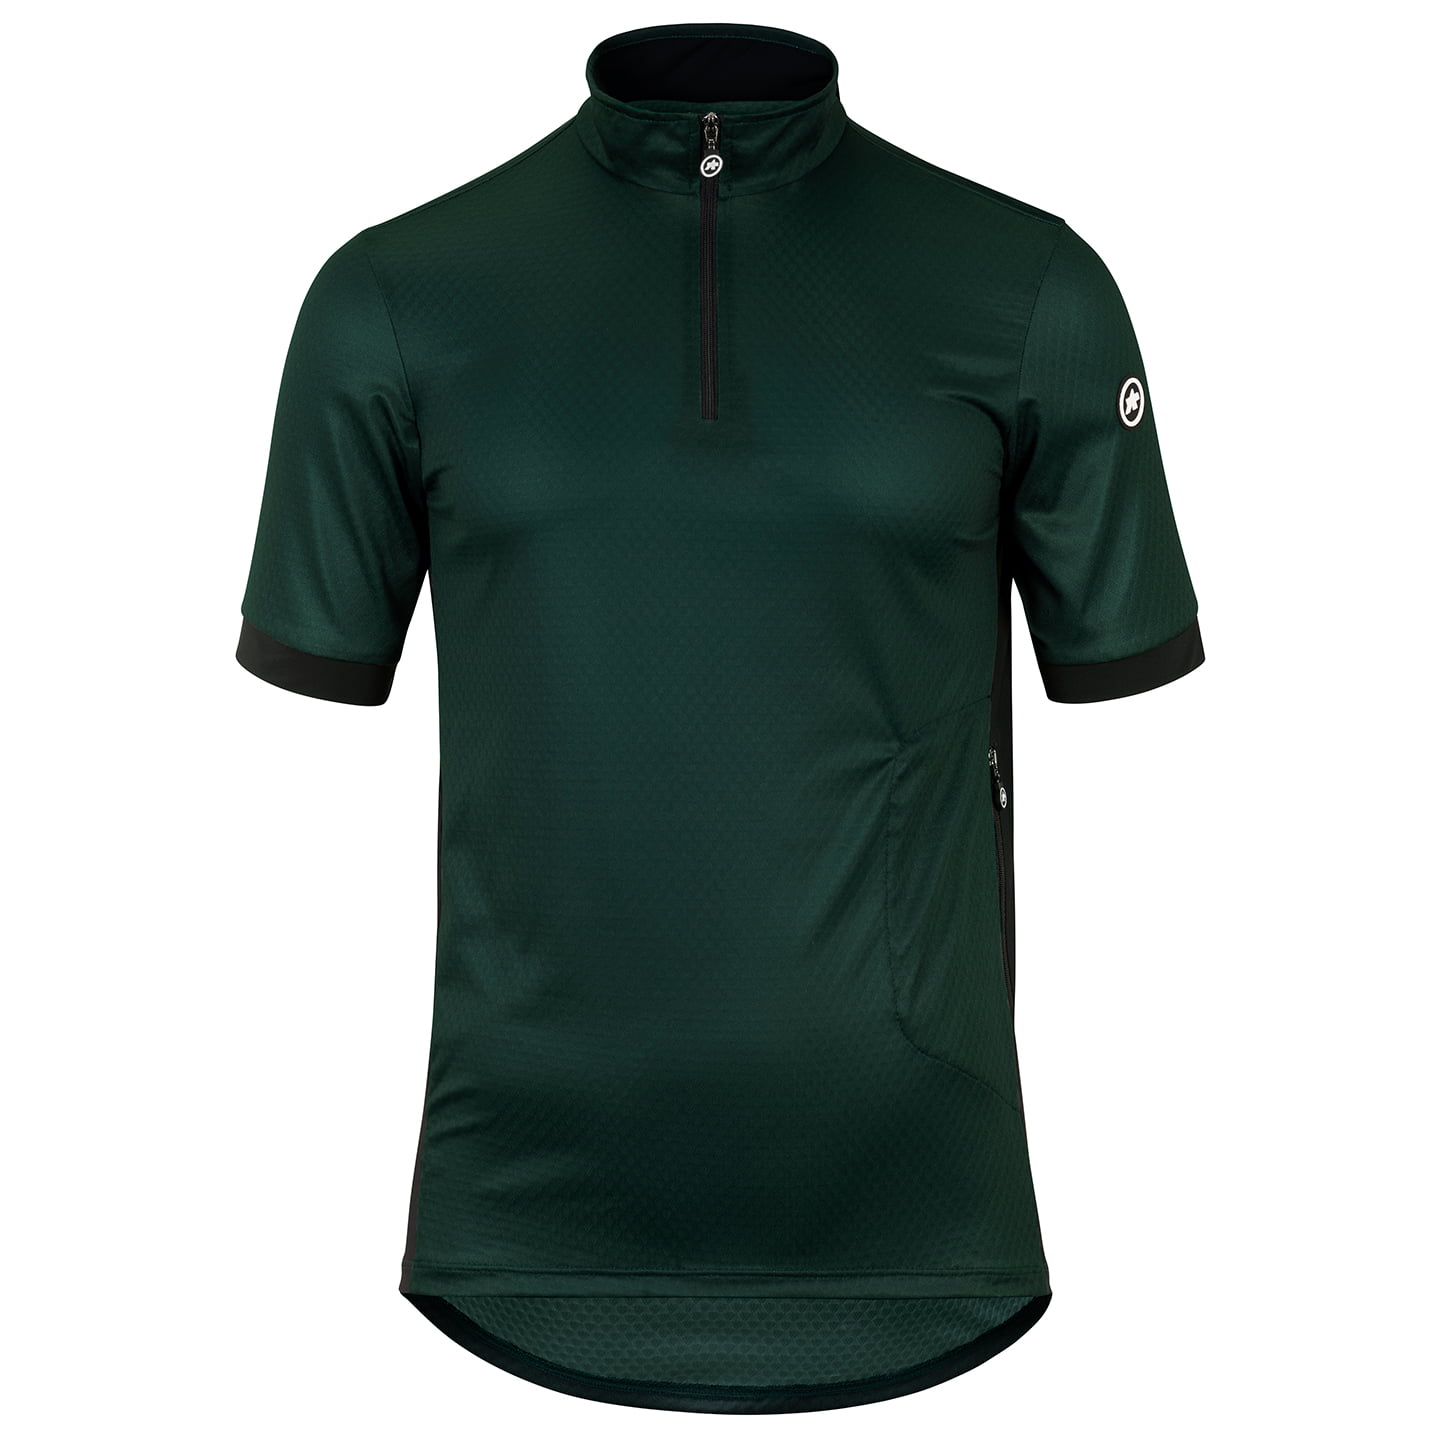 ASSOS Mille GTC C2 Short Sleeve Jersey Short Sleeve Jersey, for men, size S, Cycling jersey, Cycling clothing